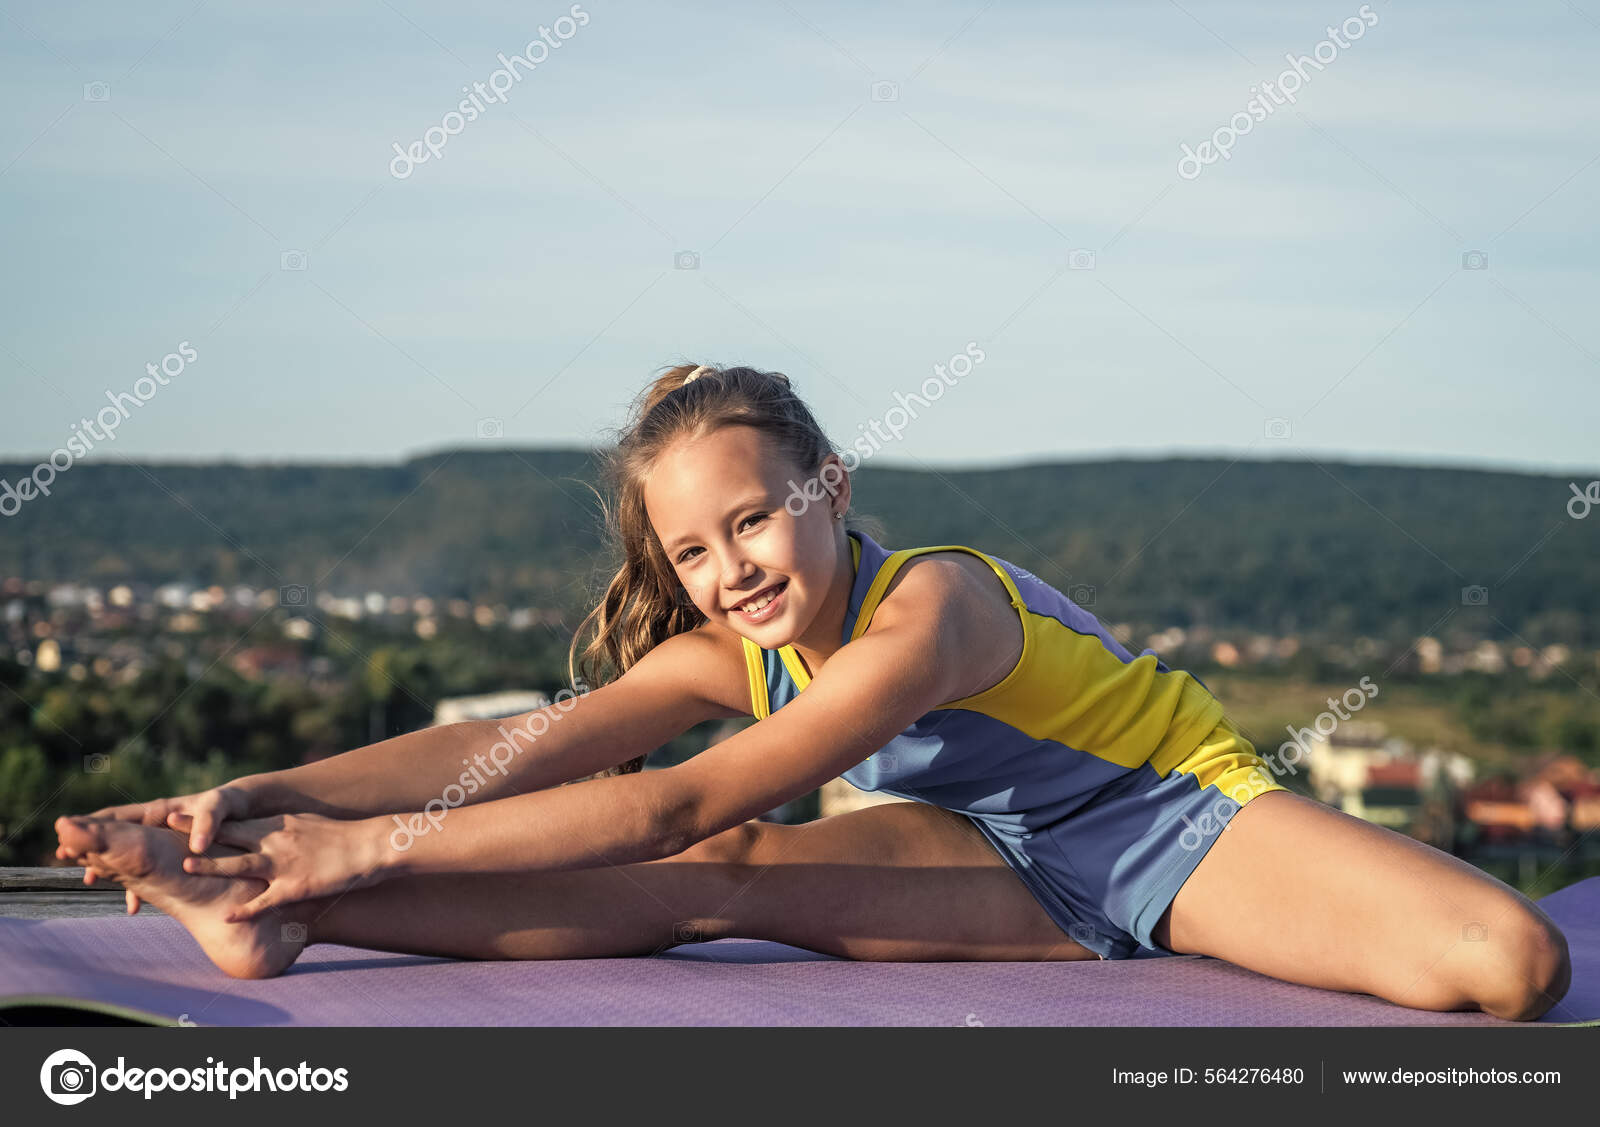 https://st.depositphotos.com/2760050/56427/i/1600/depositphotos_564276480-stock-photo-teen-girl-warming-up-sporty.jpg